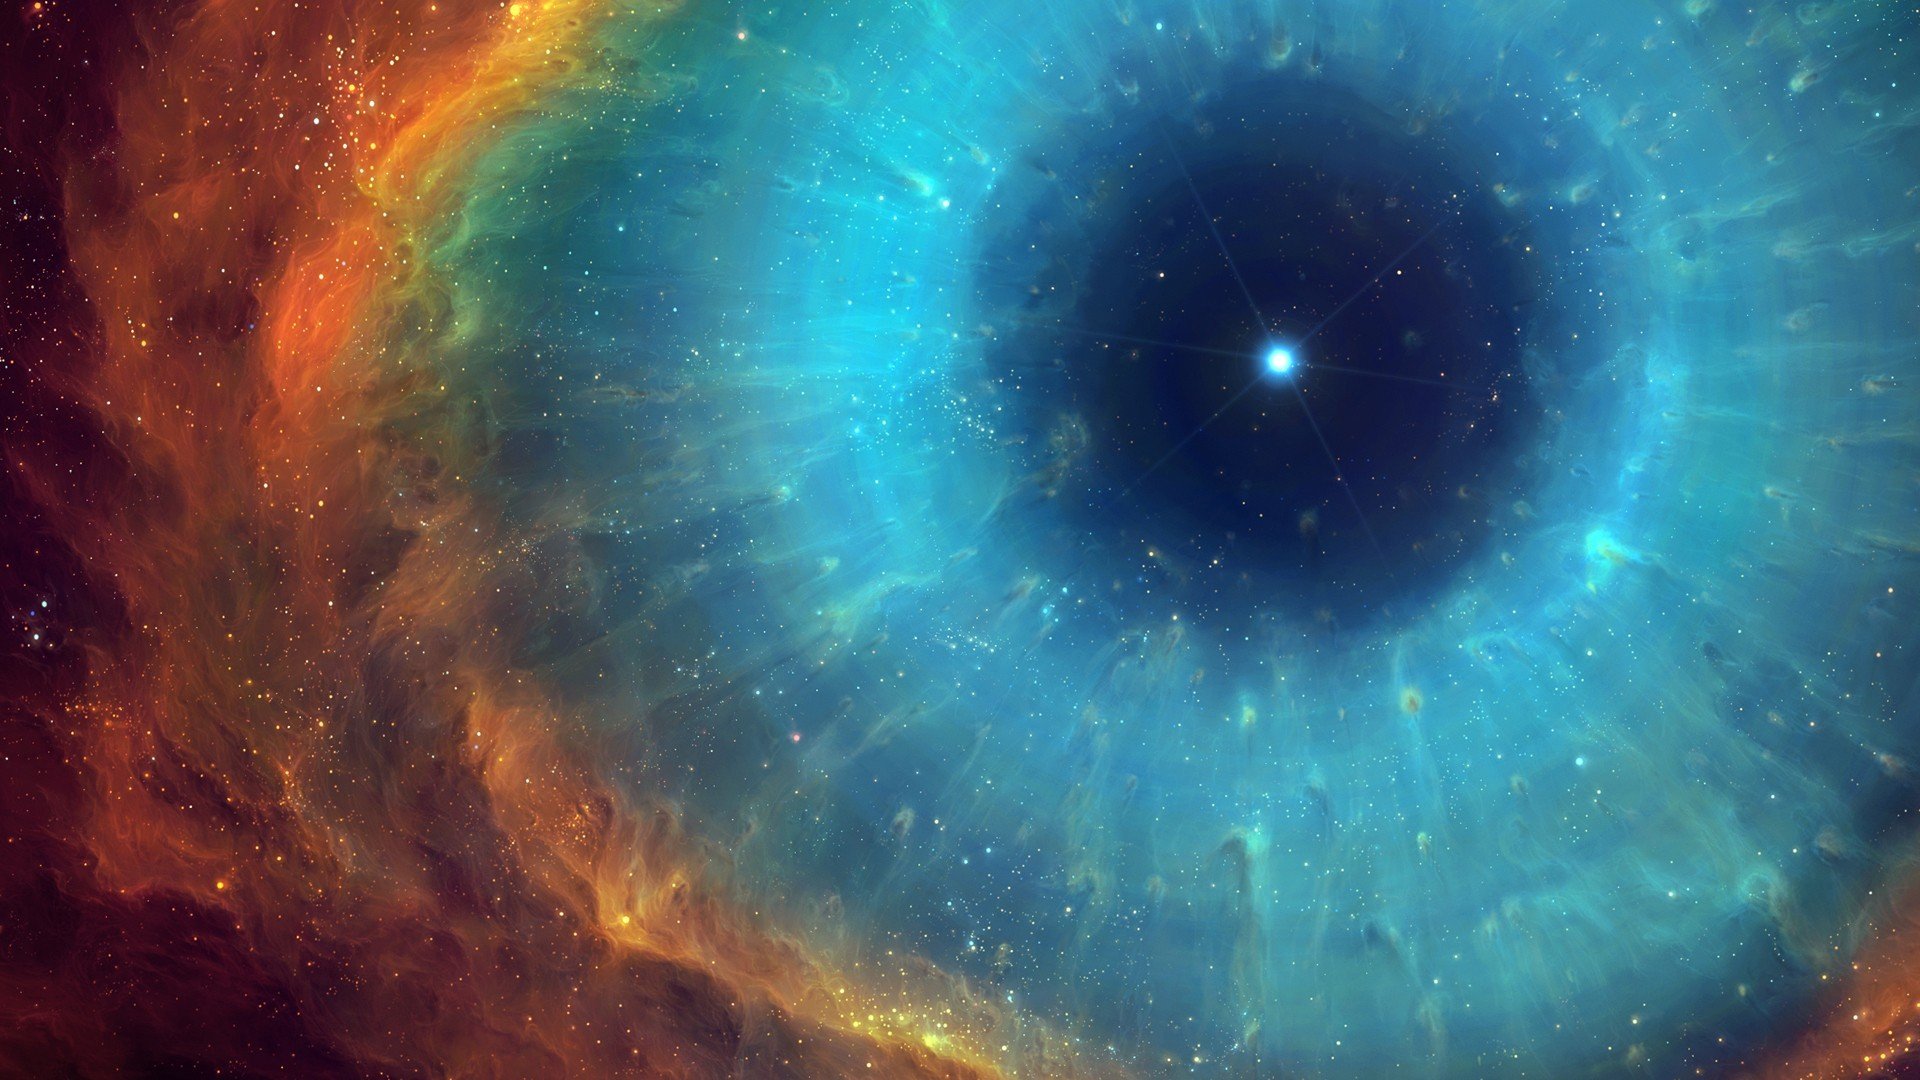 eyes, TylerCreatesWorlds, Universe, Nebula, Helix nebula, Space, Stars, Space art, Digital art Wallpaper